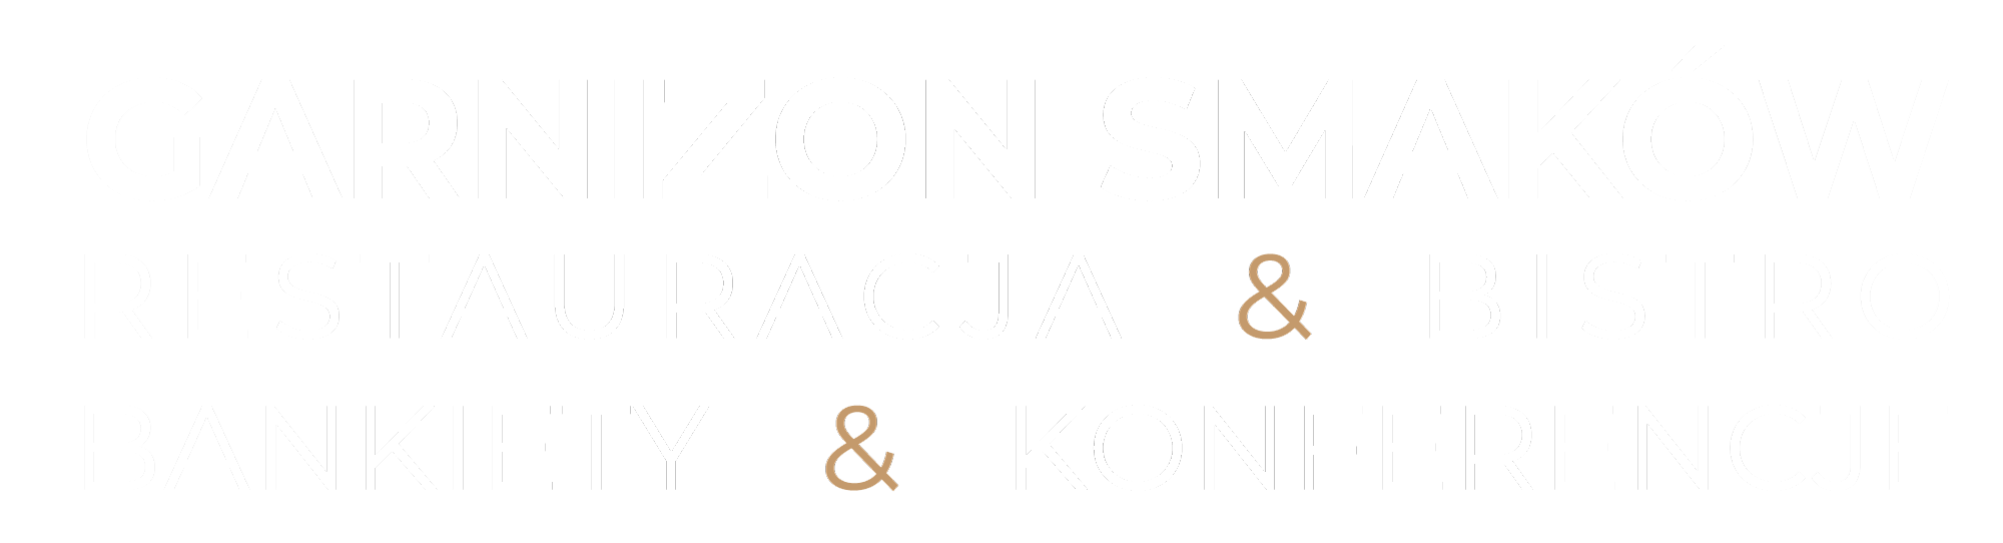 GARNIZON-SMAKOW-ZNAK